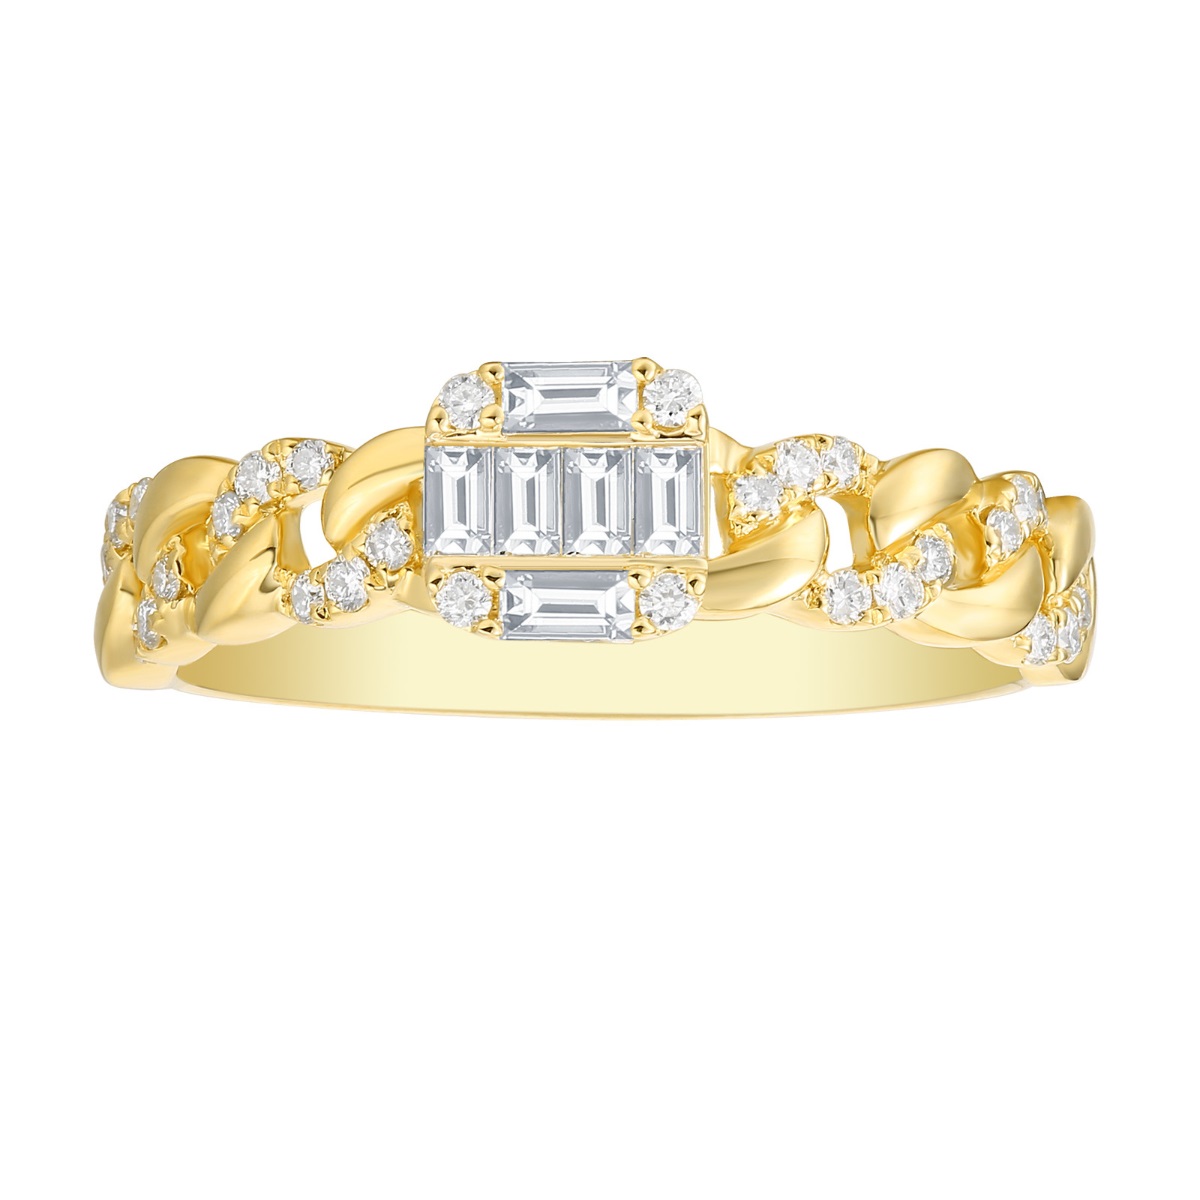 R36561WHT – 18K Yellow Gold  Diamond Ring, 0.35 TCW